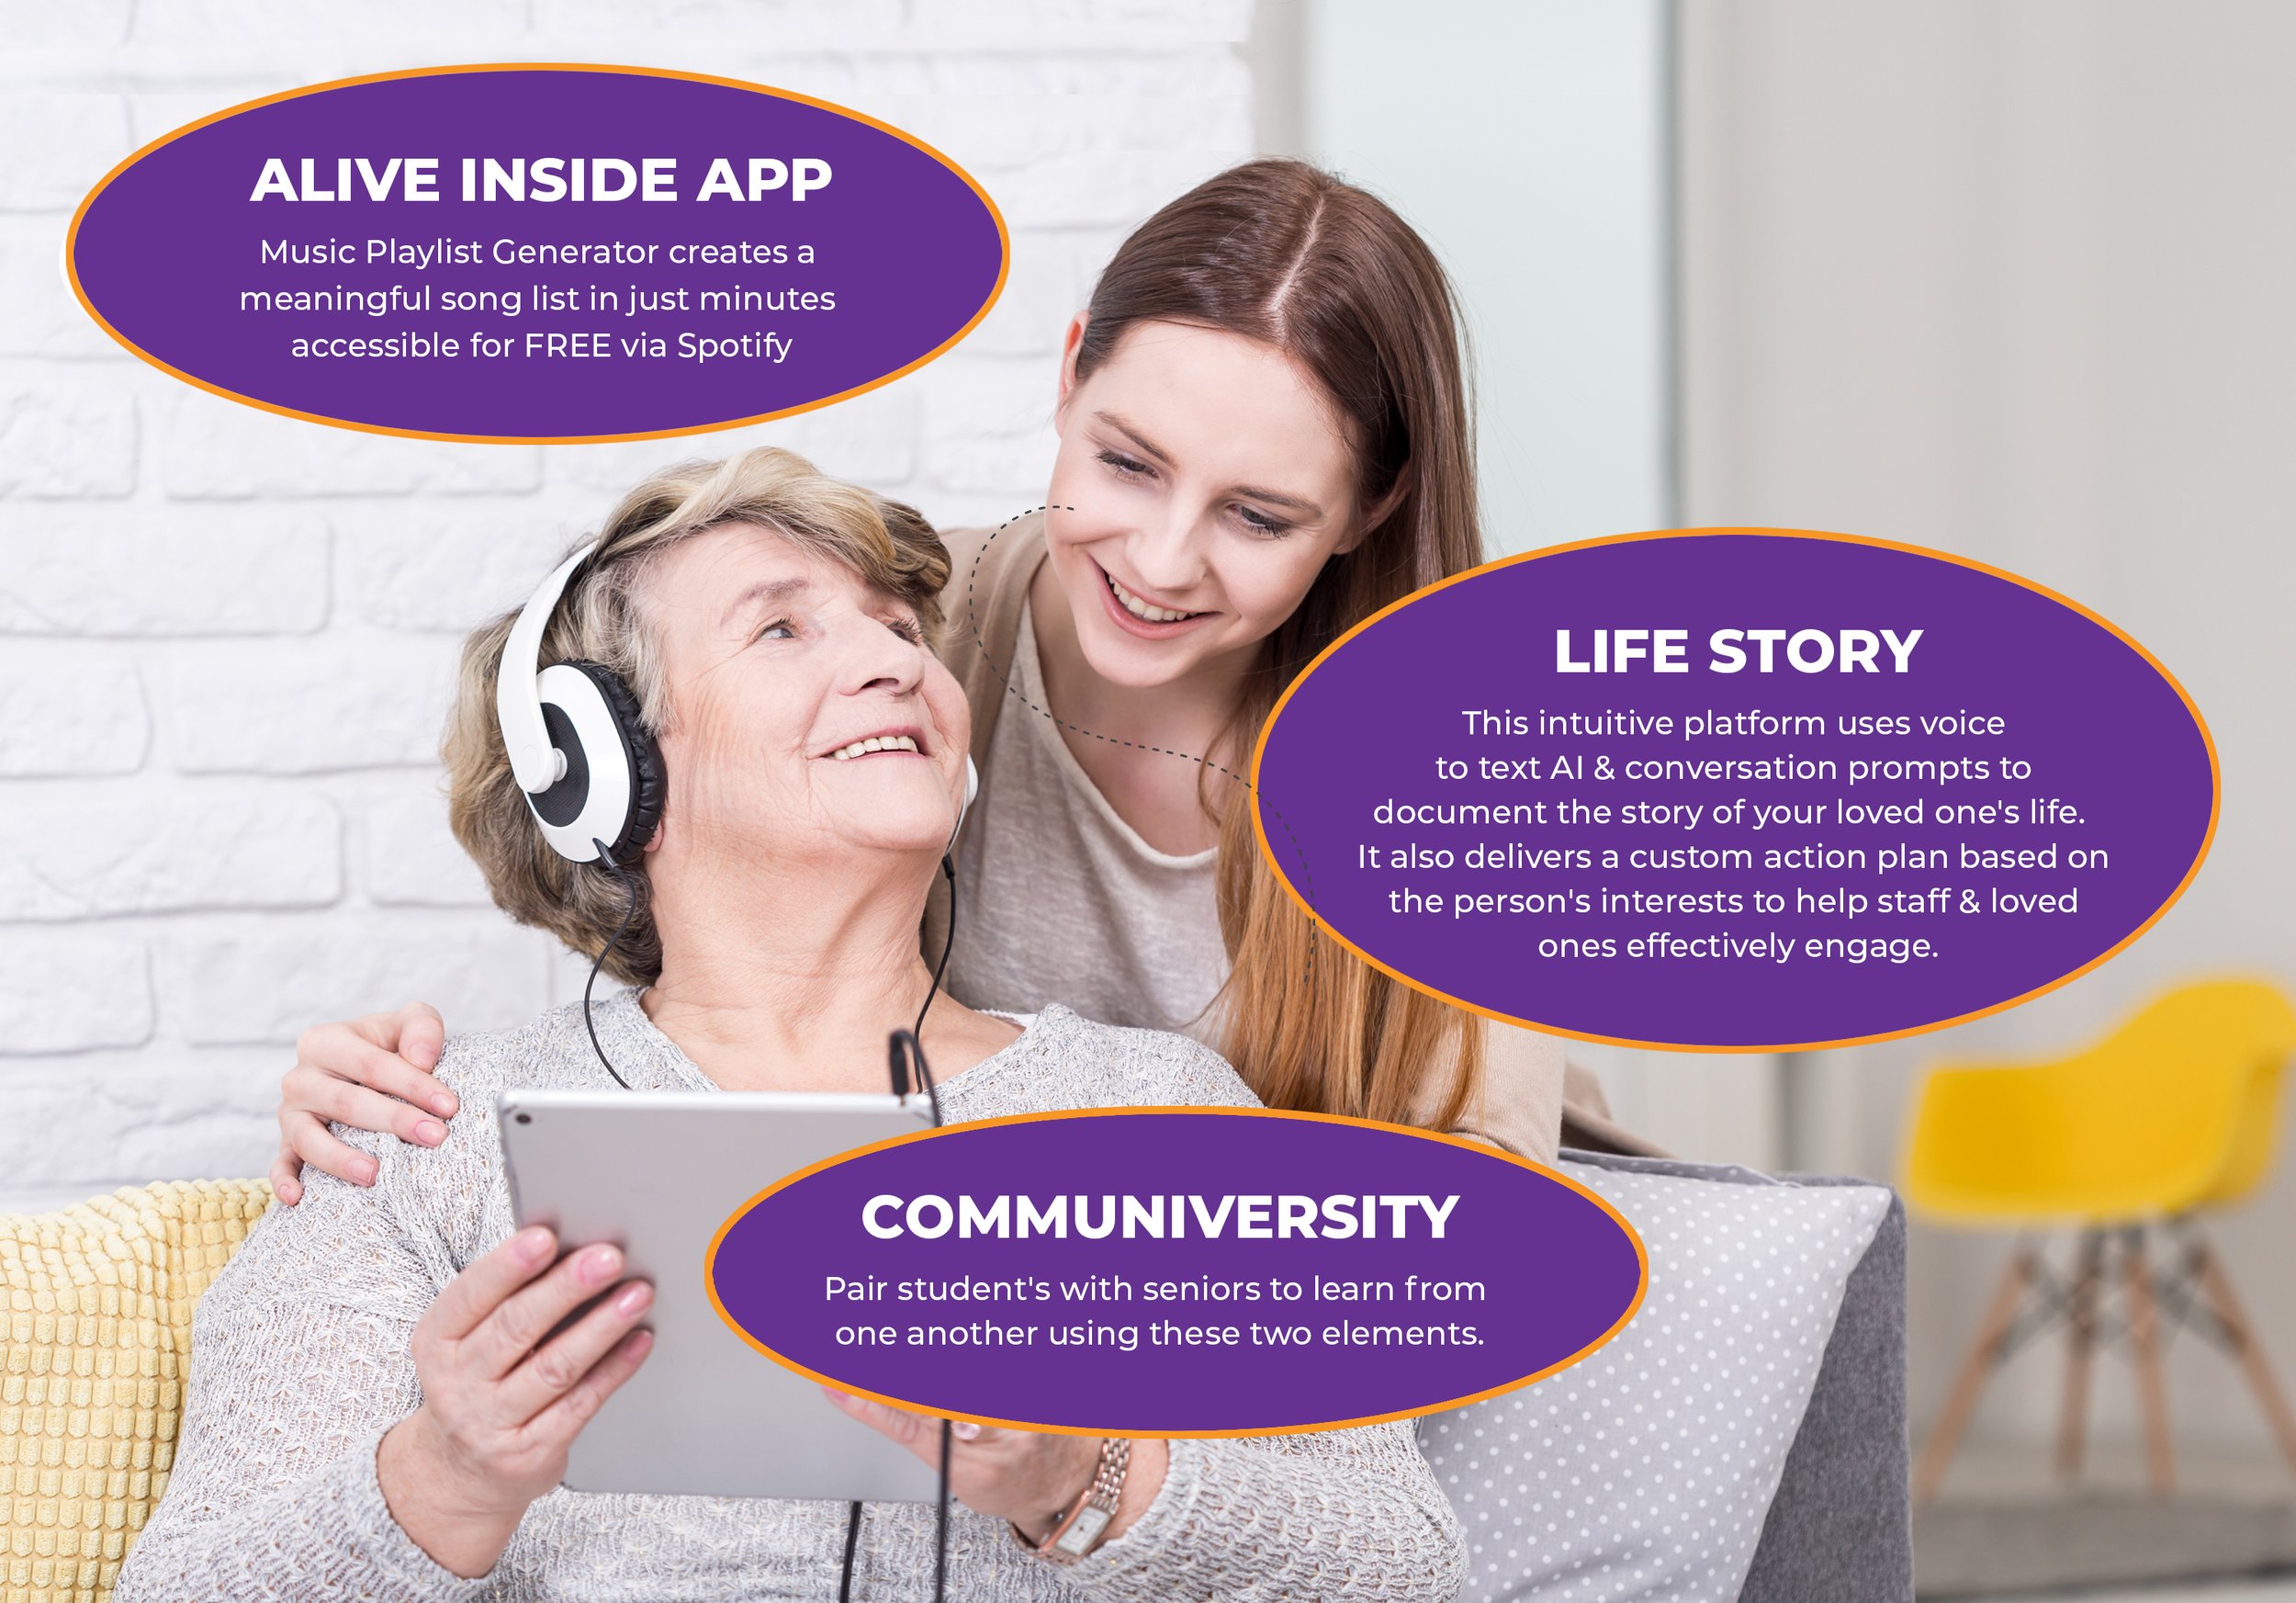 Alive Inside App | Life Story | Communiversity